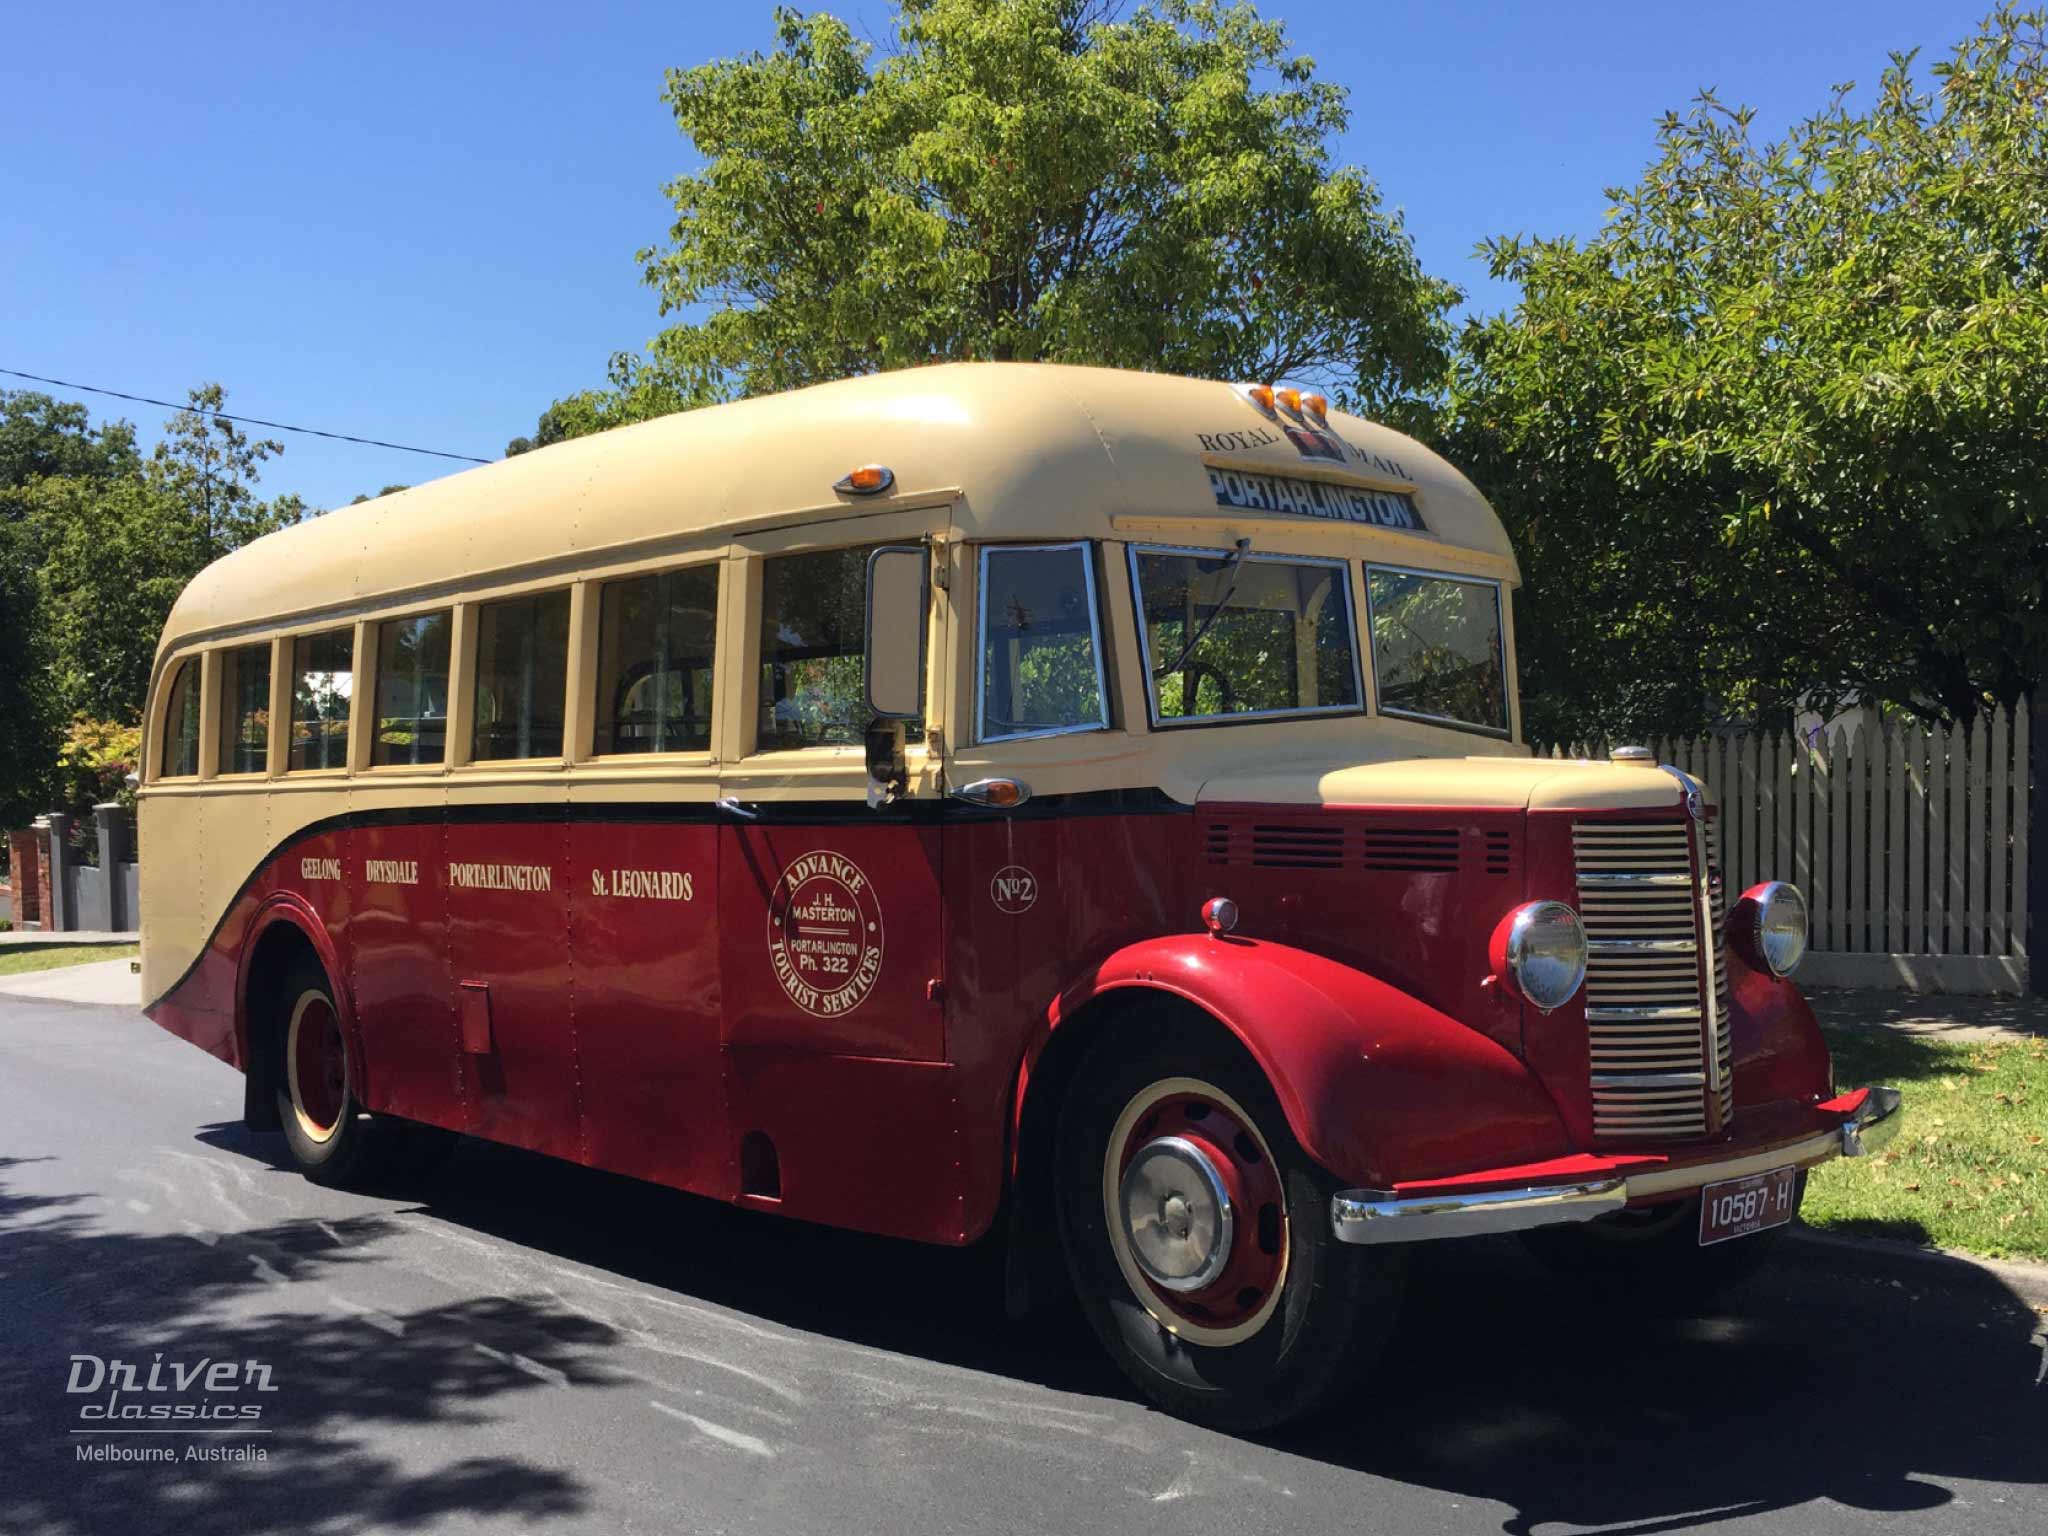 Bedford OB bus, 1946 model